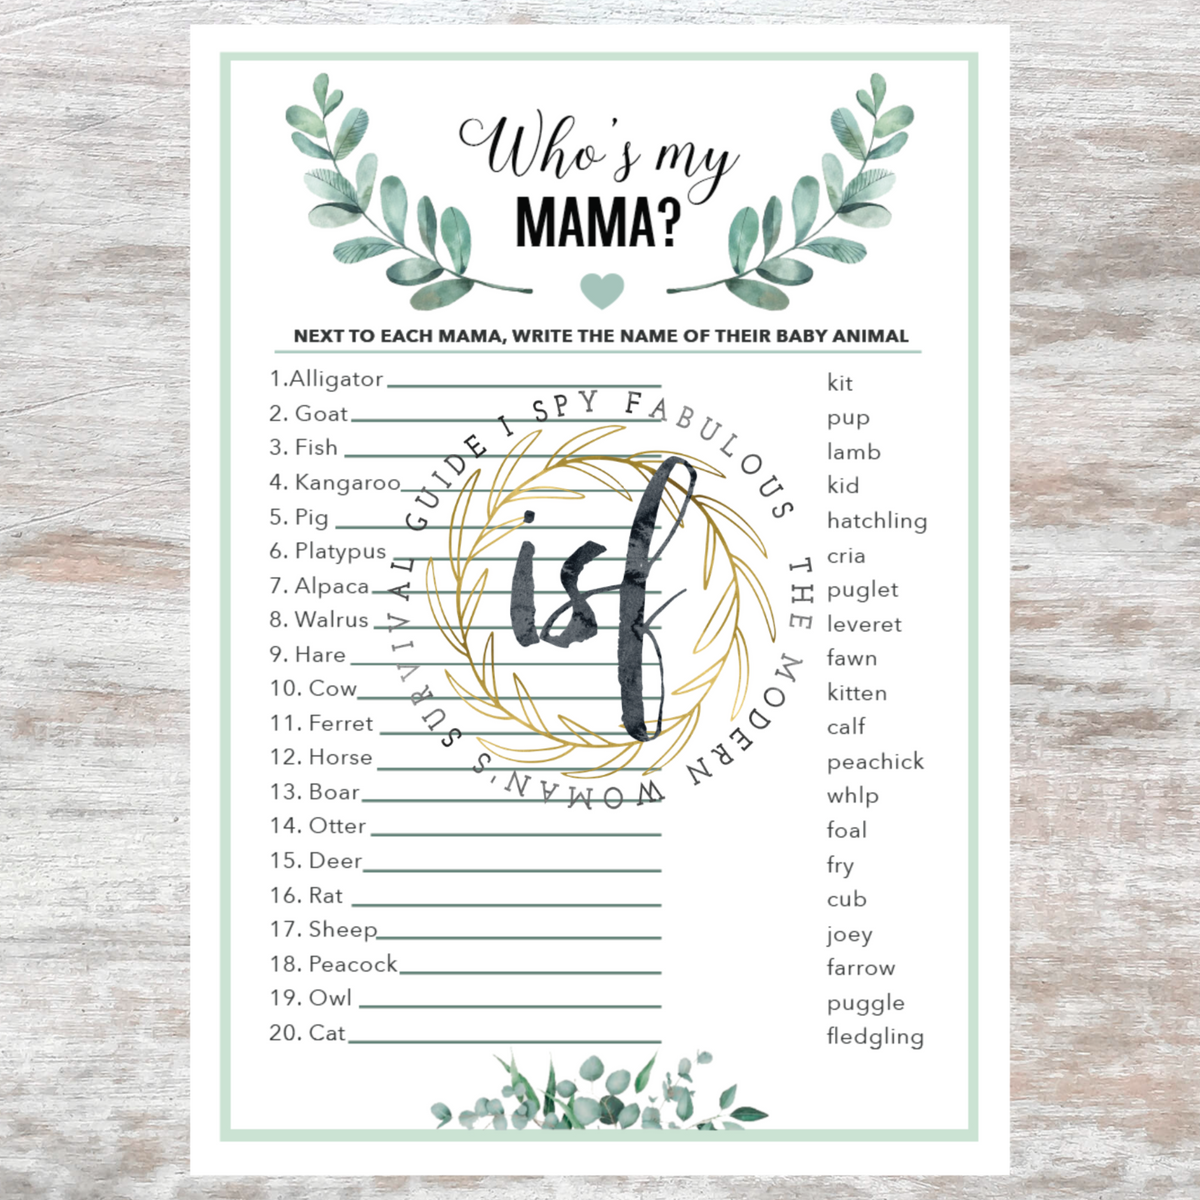 Who's My Mama Printable Baby Shower Game – ISpyFabulous